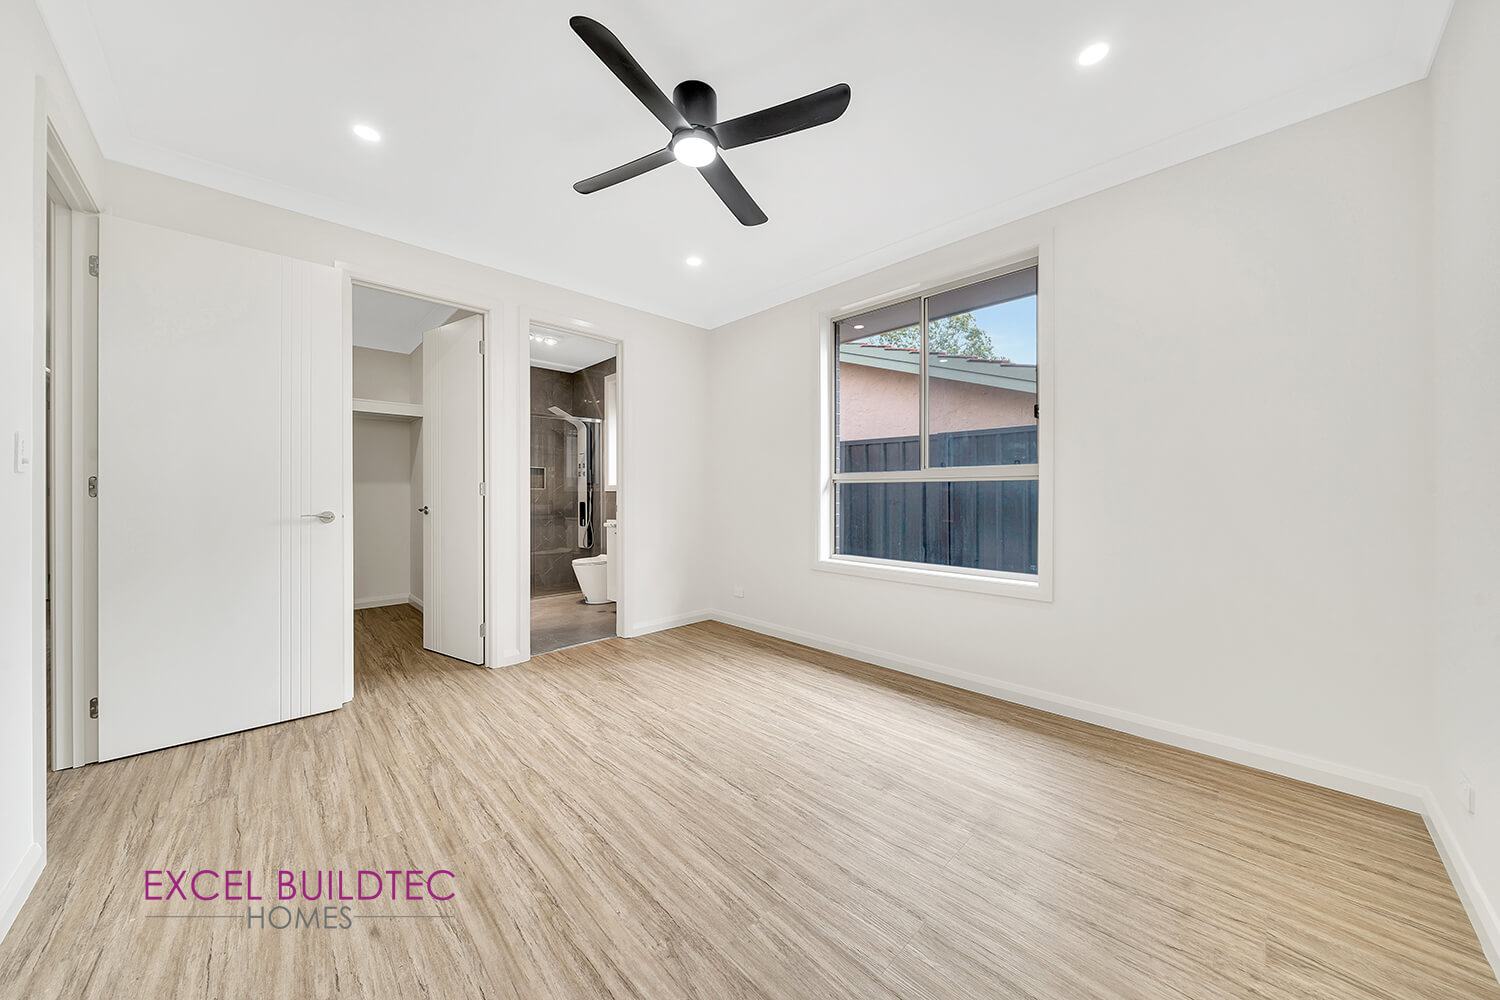 Pierre - Modbury | Home Builders in Adelaide : Excel Buildtec Homes